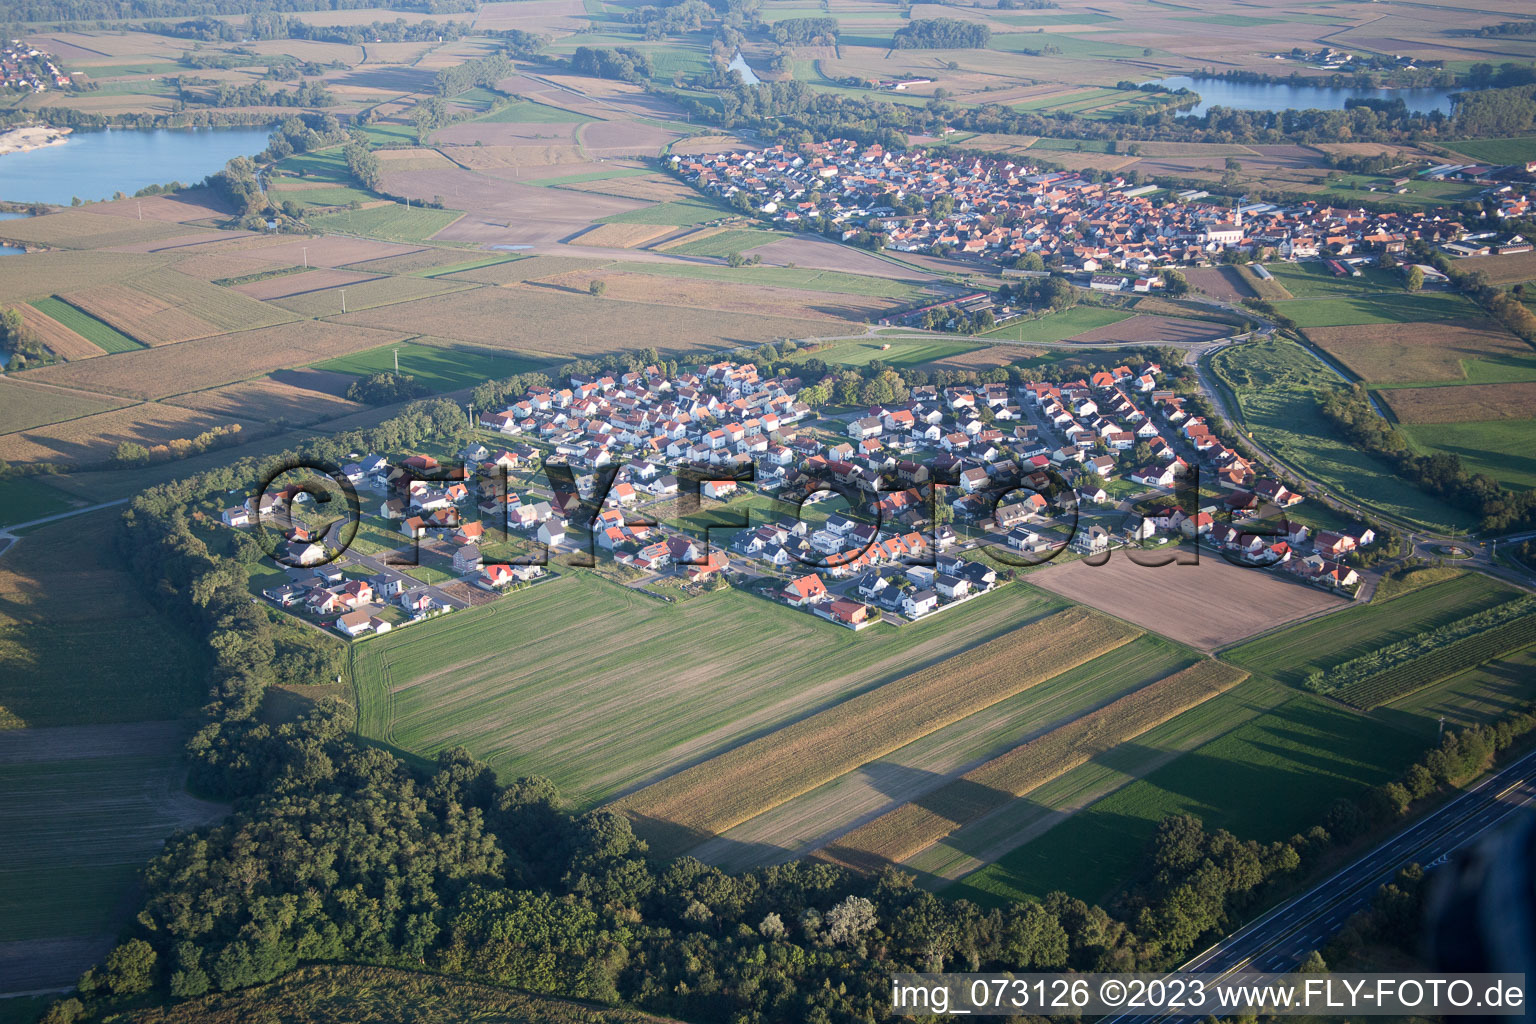 Hardtwald in the state Rhineland-Palatinate, Germany